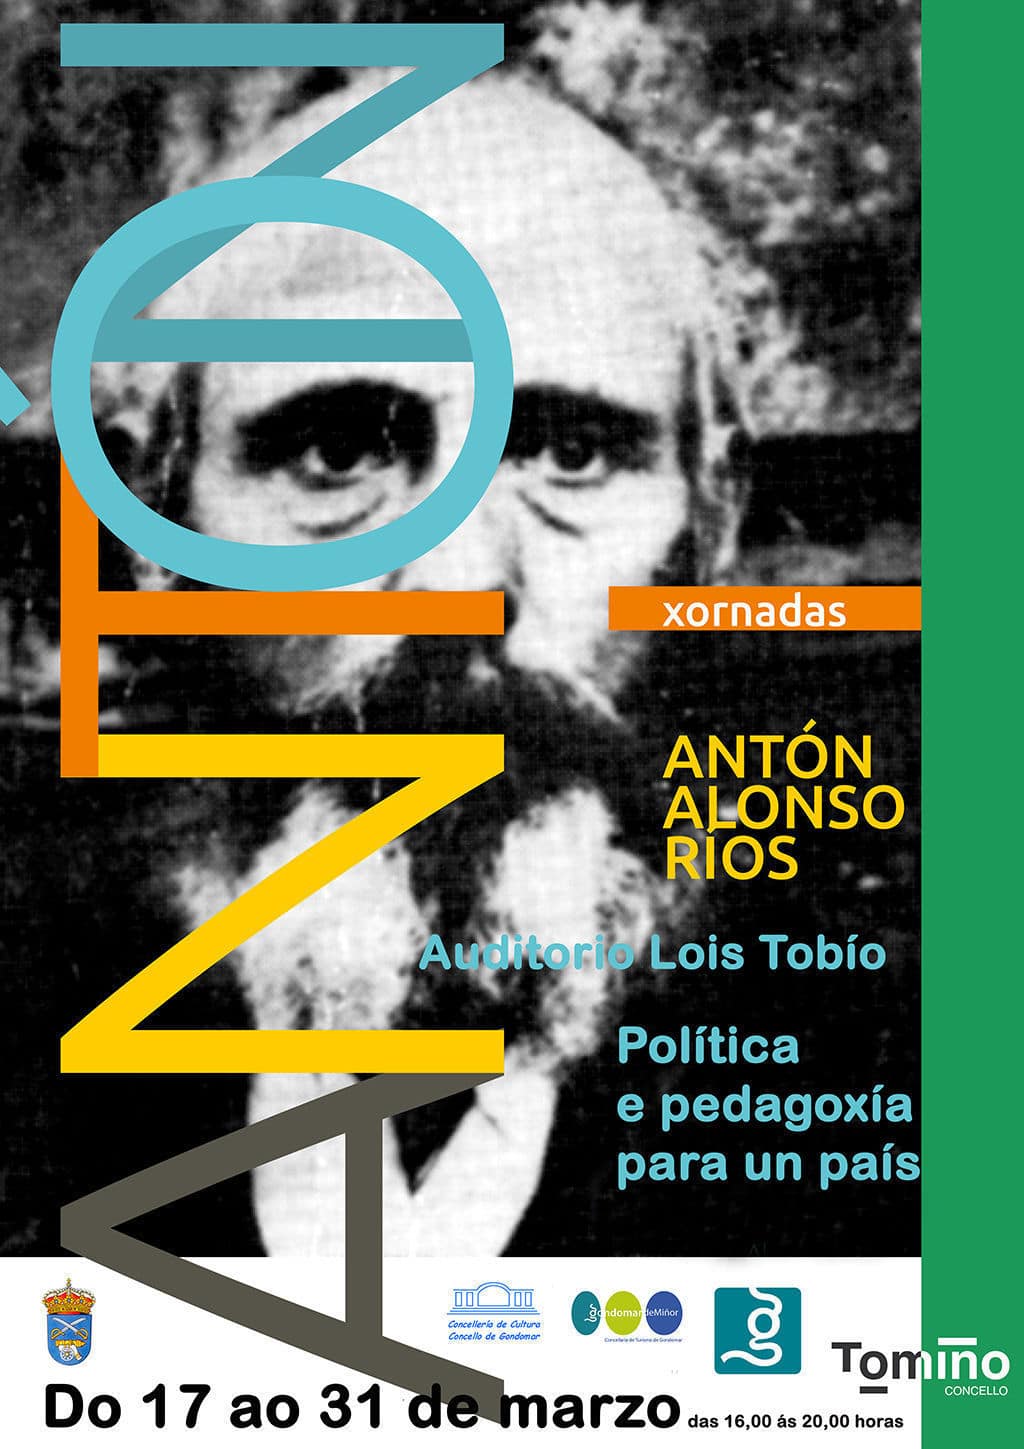 Antón Alonso Ríos